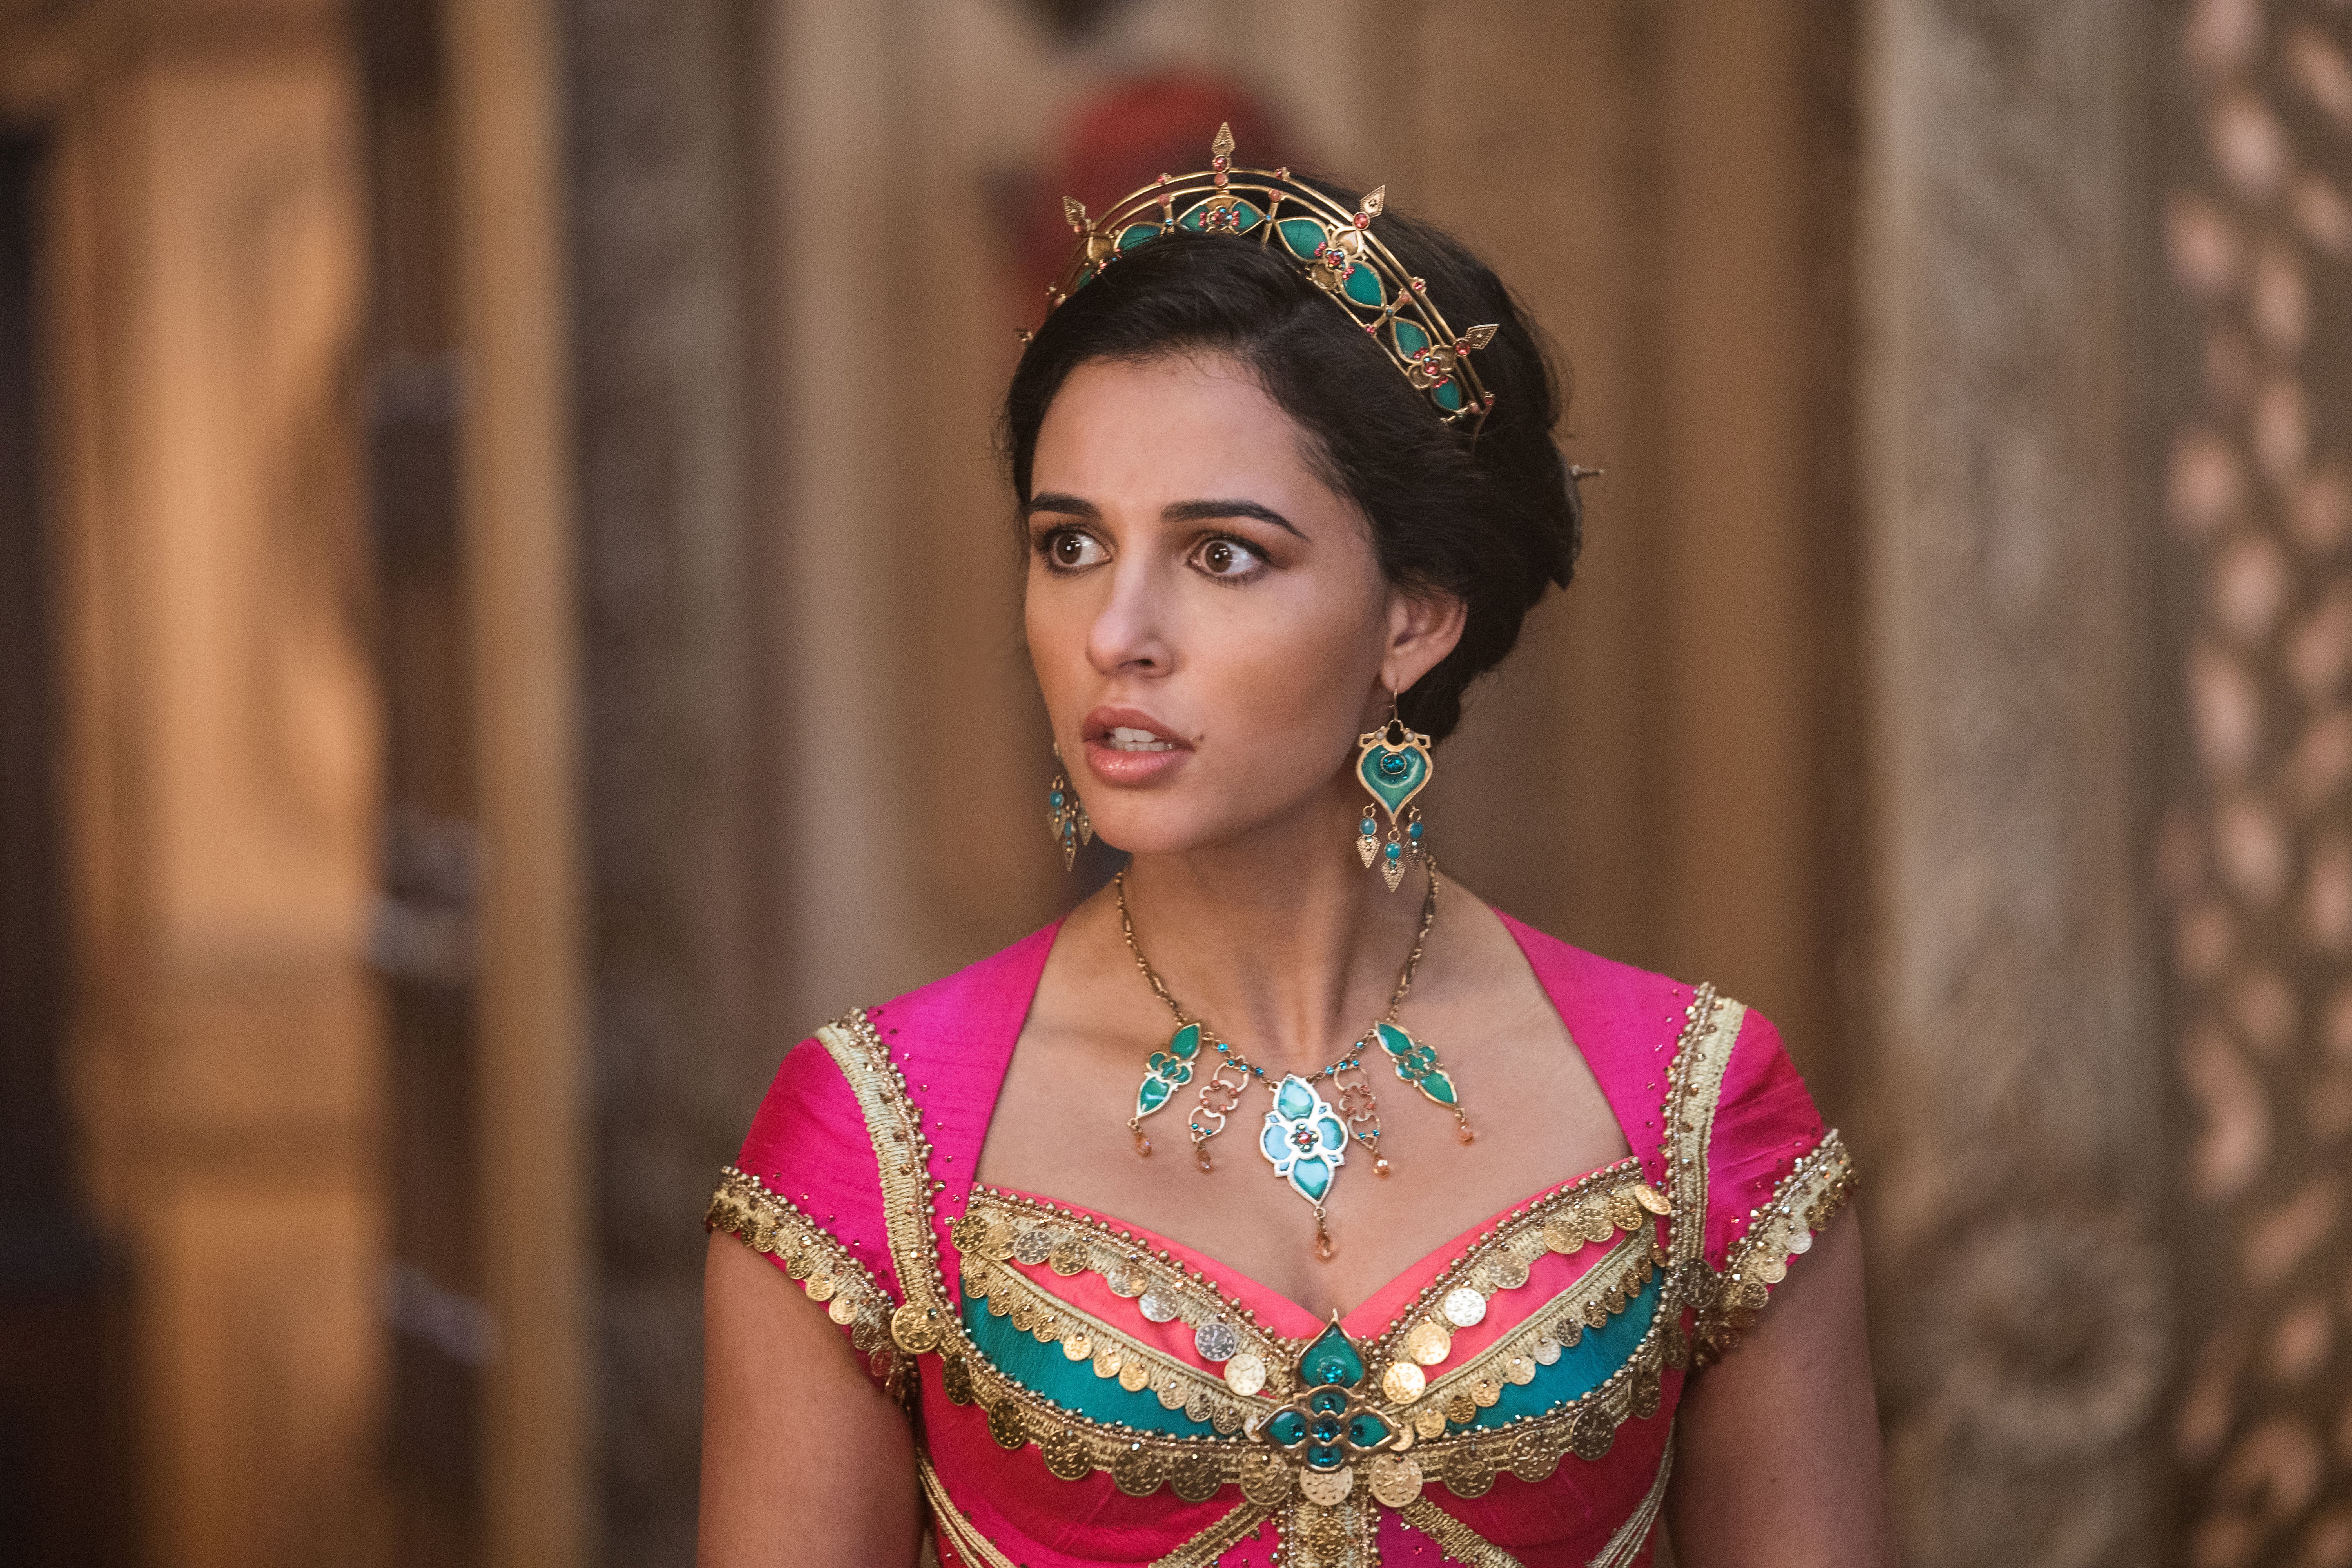 Who Plays Jasmine in the New Aladdin Movie?